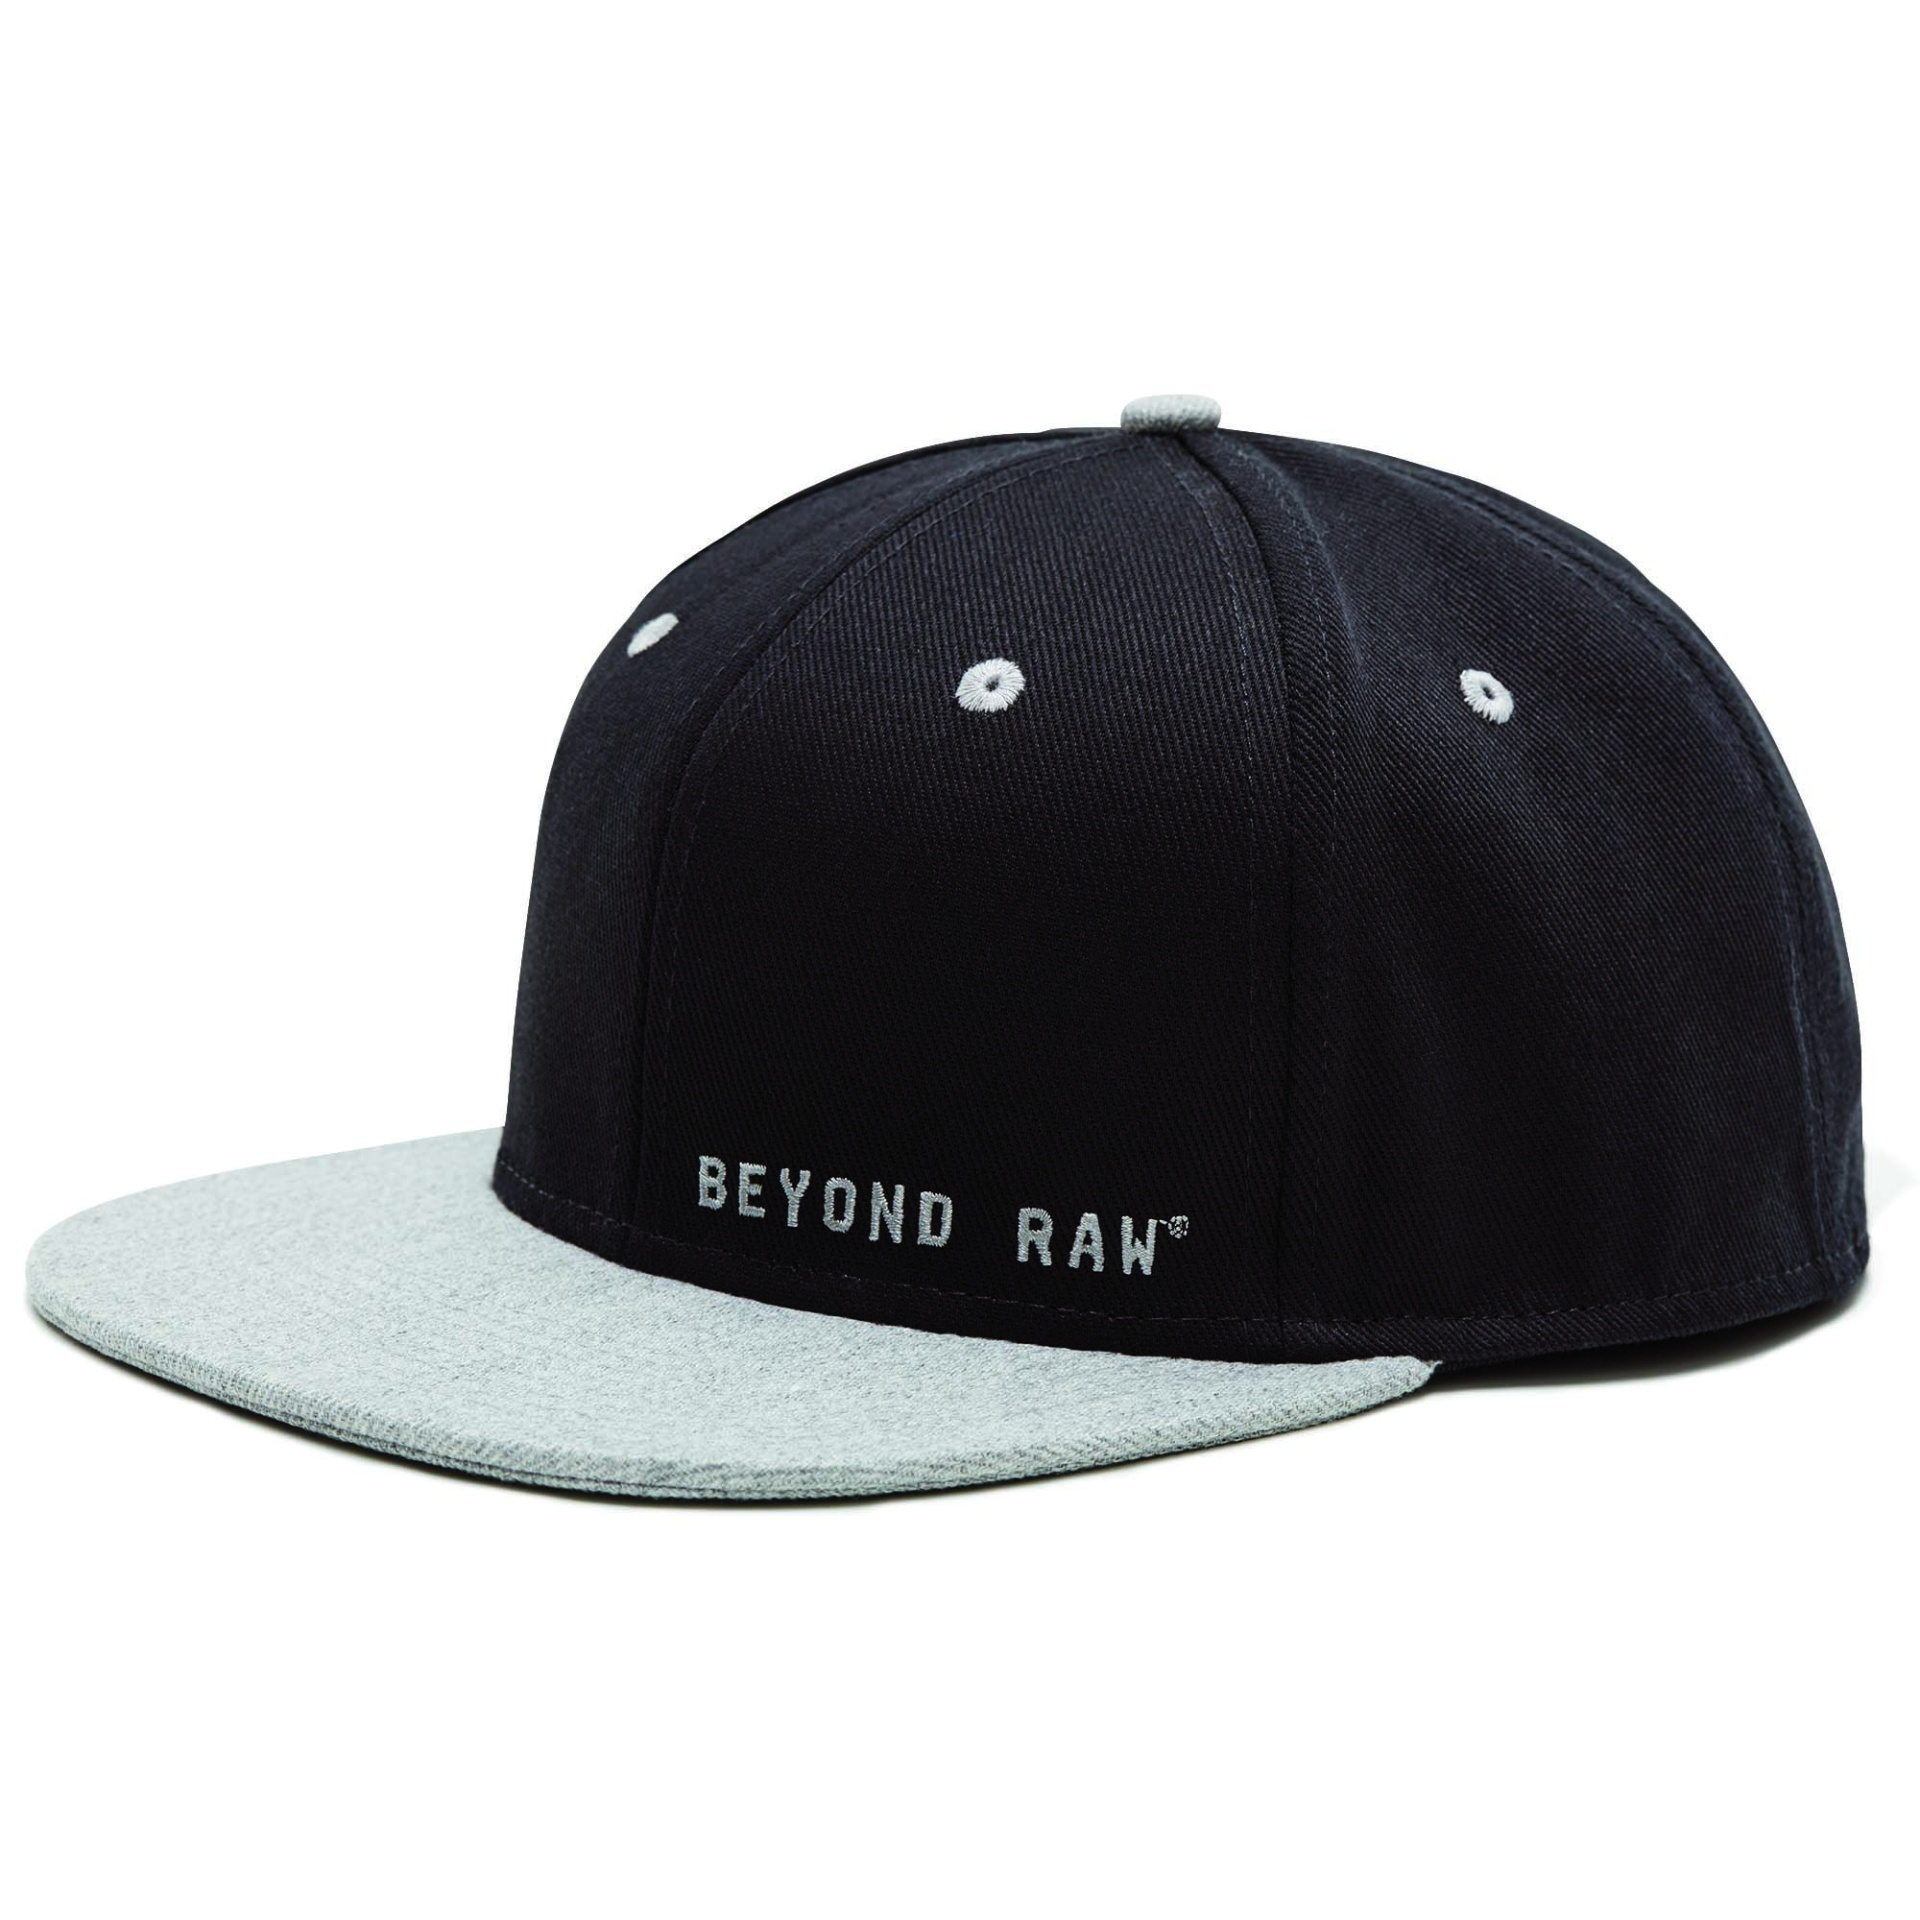 slide 1 of 1, Beyond Raw Flat Bill Black Hat, Gray Bill, 1 ct